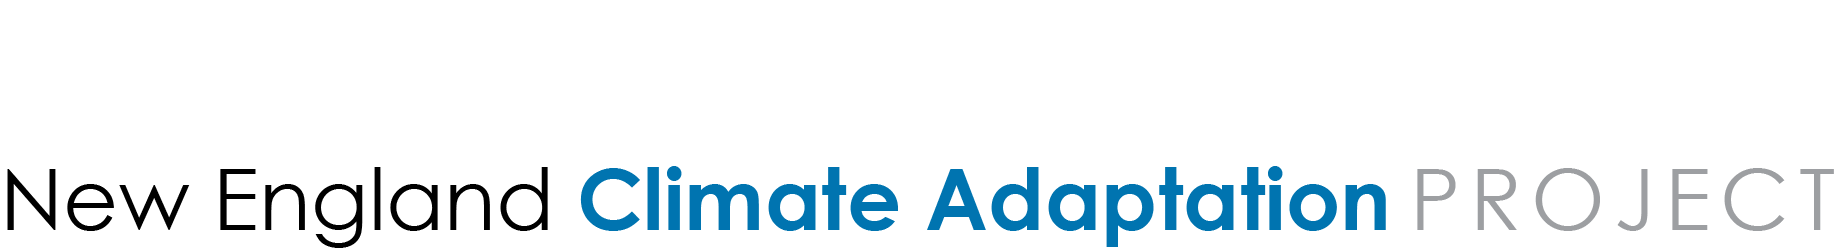 NECAP | New England Climate Adaptation Project logo